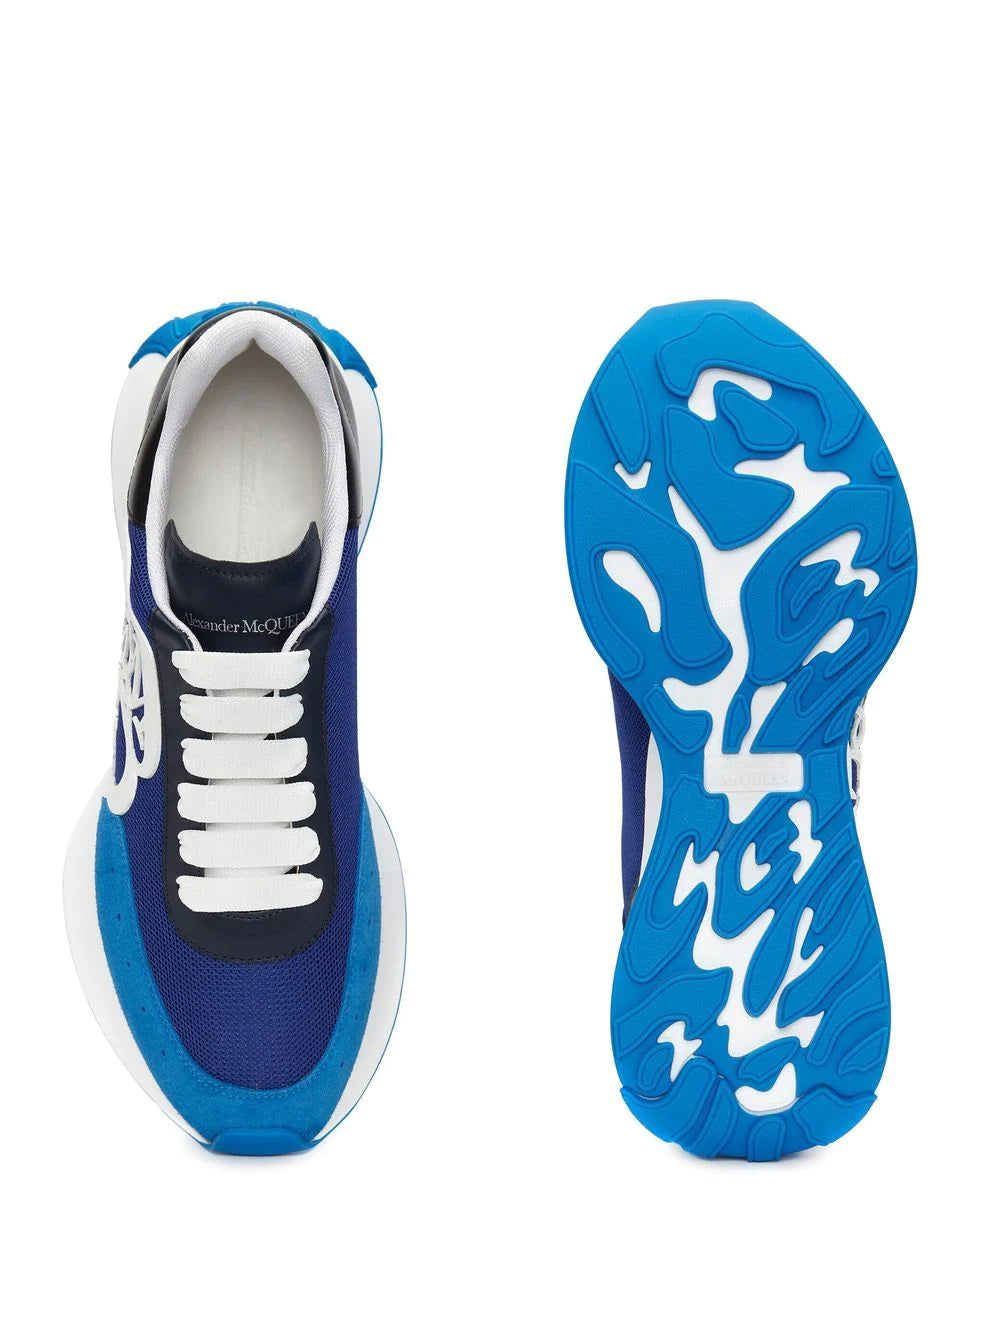 ALEXANDER MCQUEEN Sprint Runnner Sneakers Blue/White - MAISONDEFASHION.COM